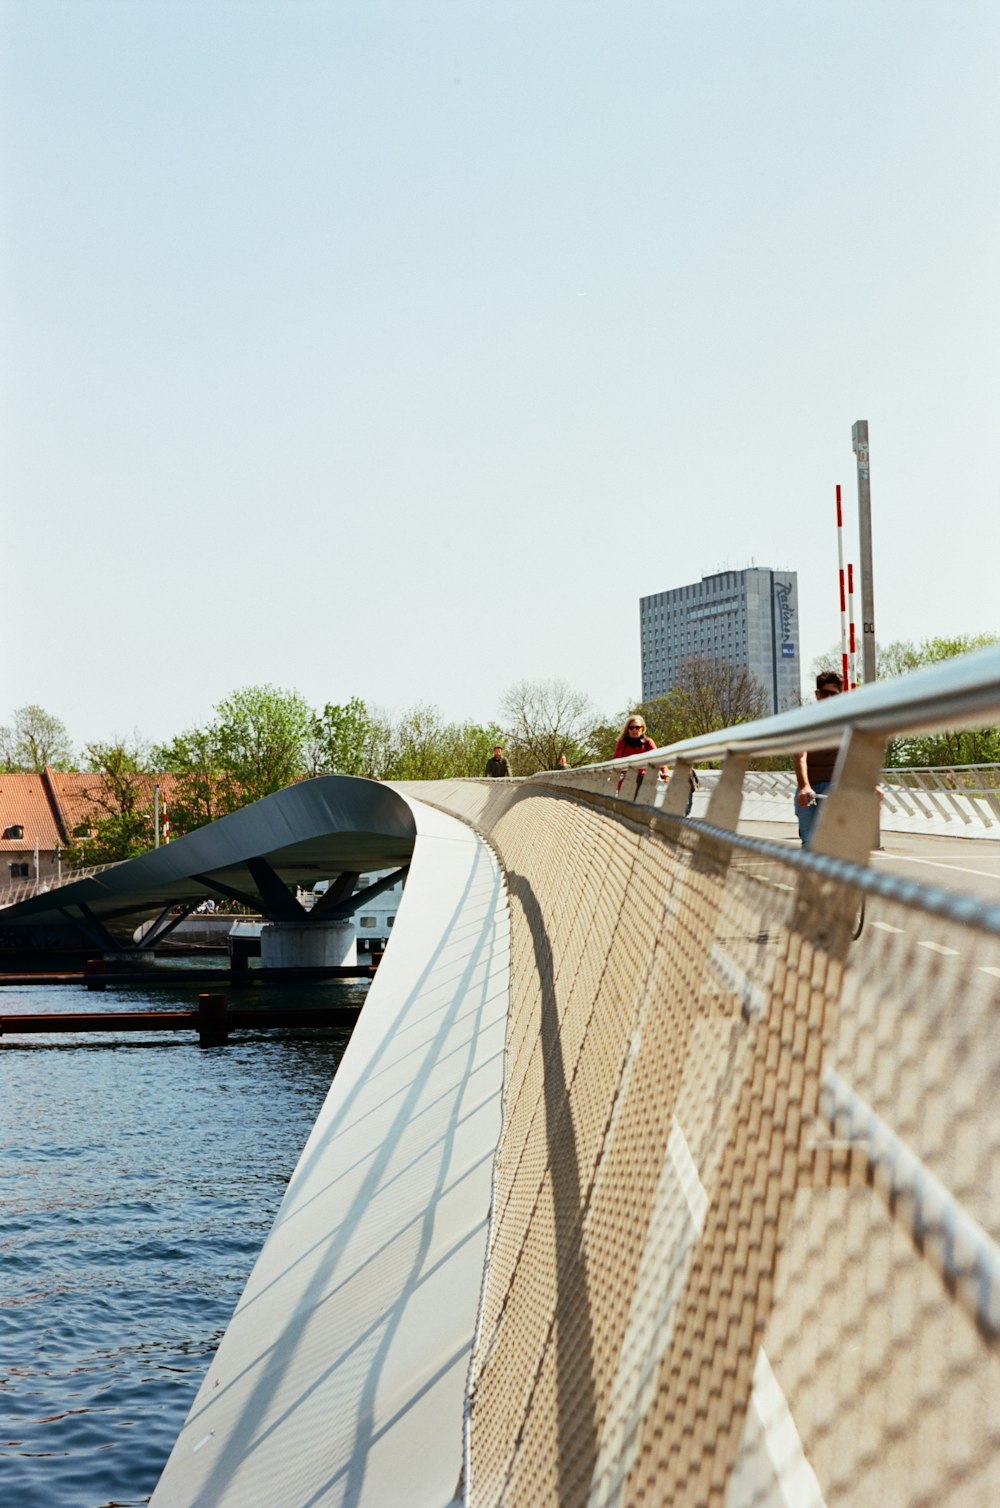 a man riding a skateboard across a bridge